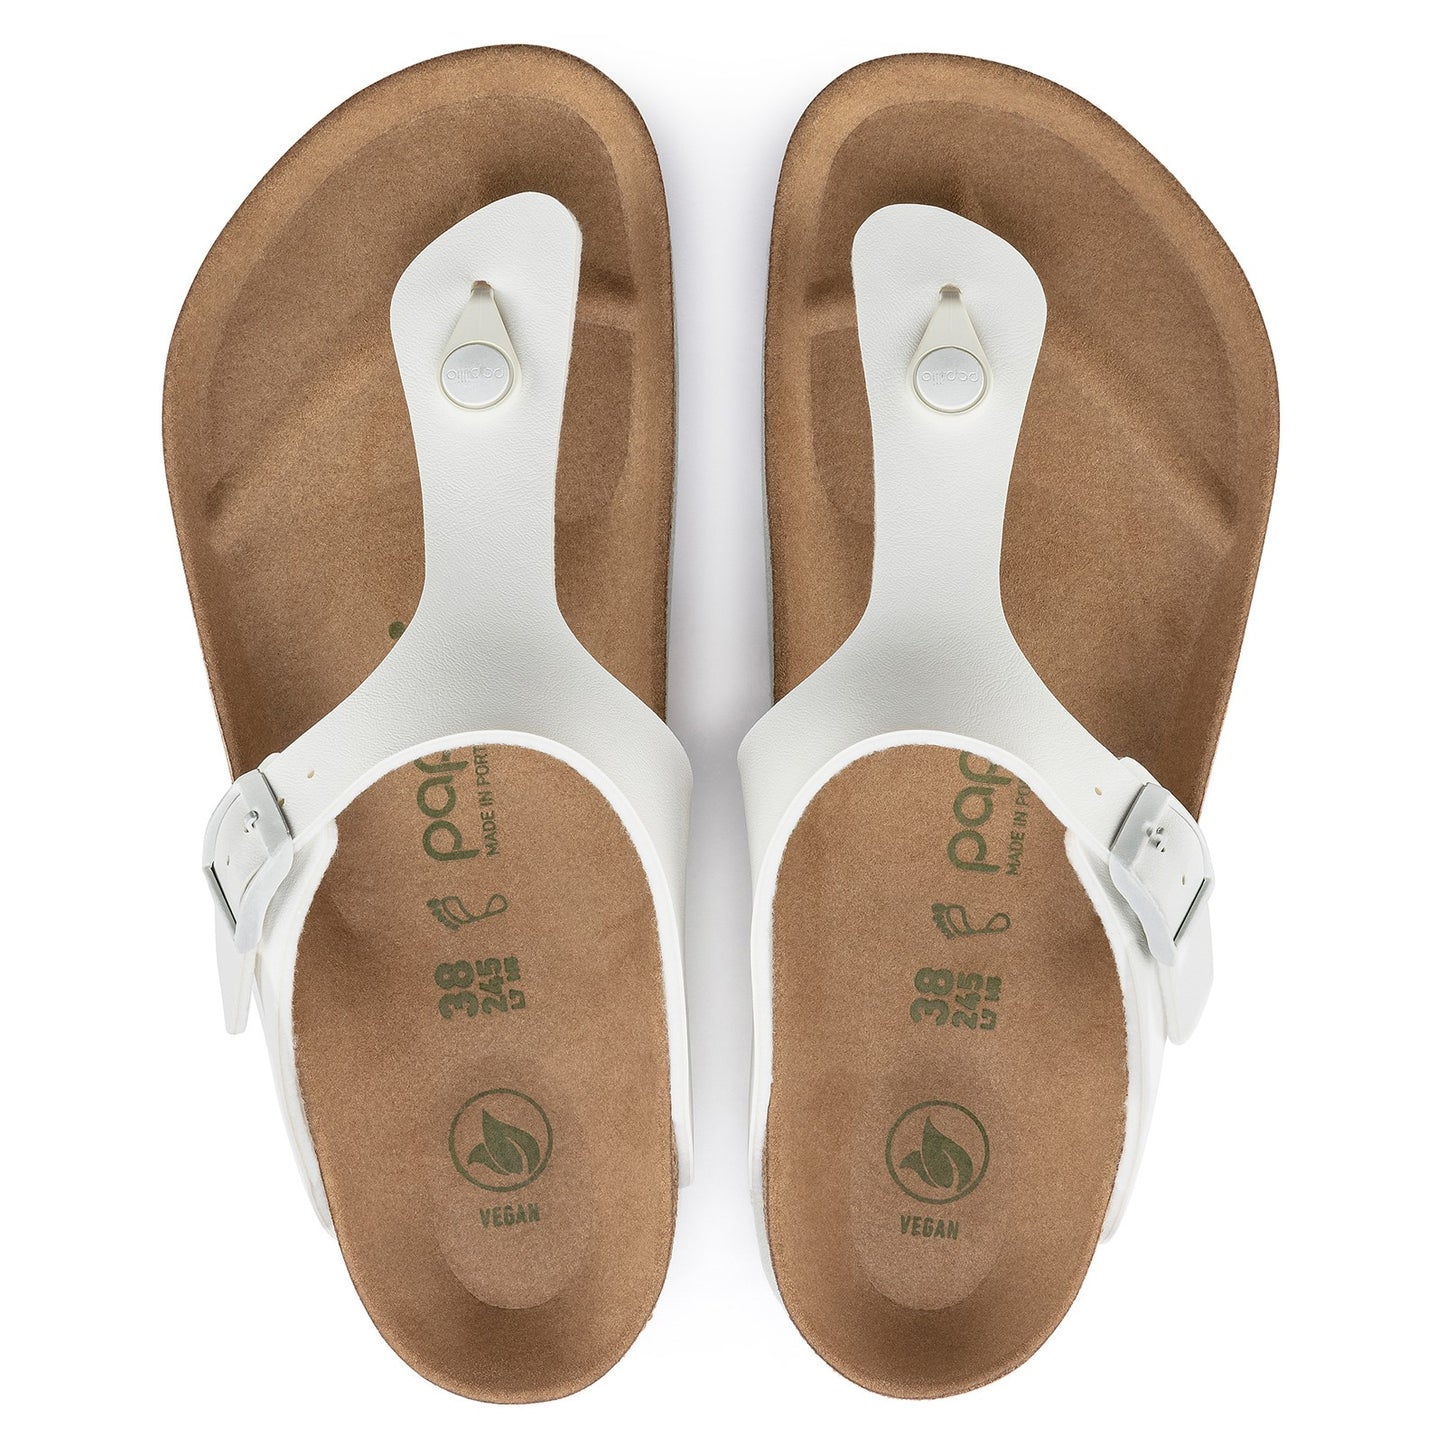 Peltz Shoes  Women's Birkenstock Gizeh Platform Sandal - Regular Width WHITE 1018 557 R